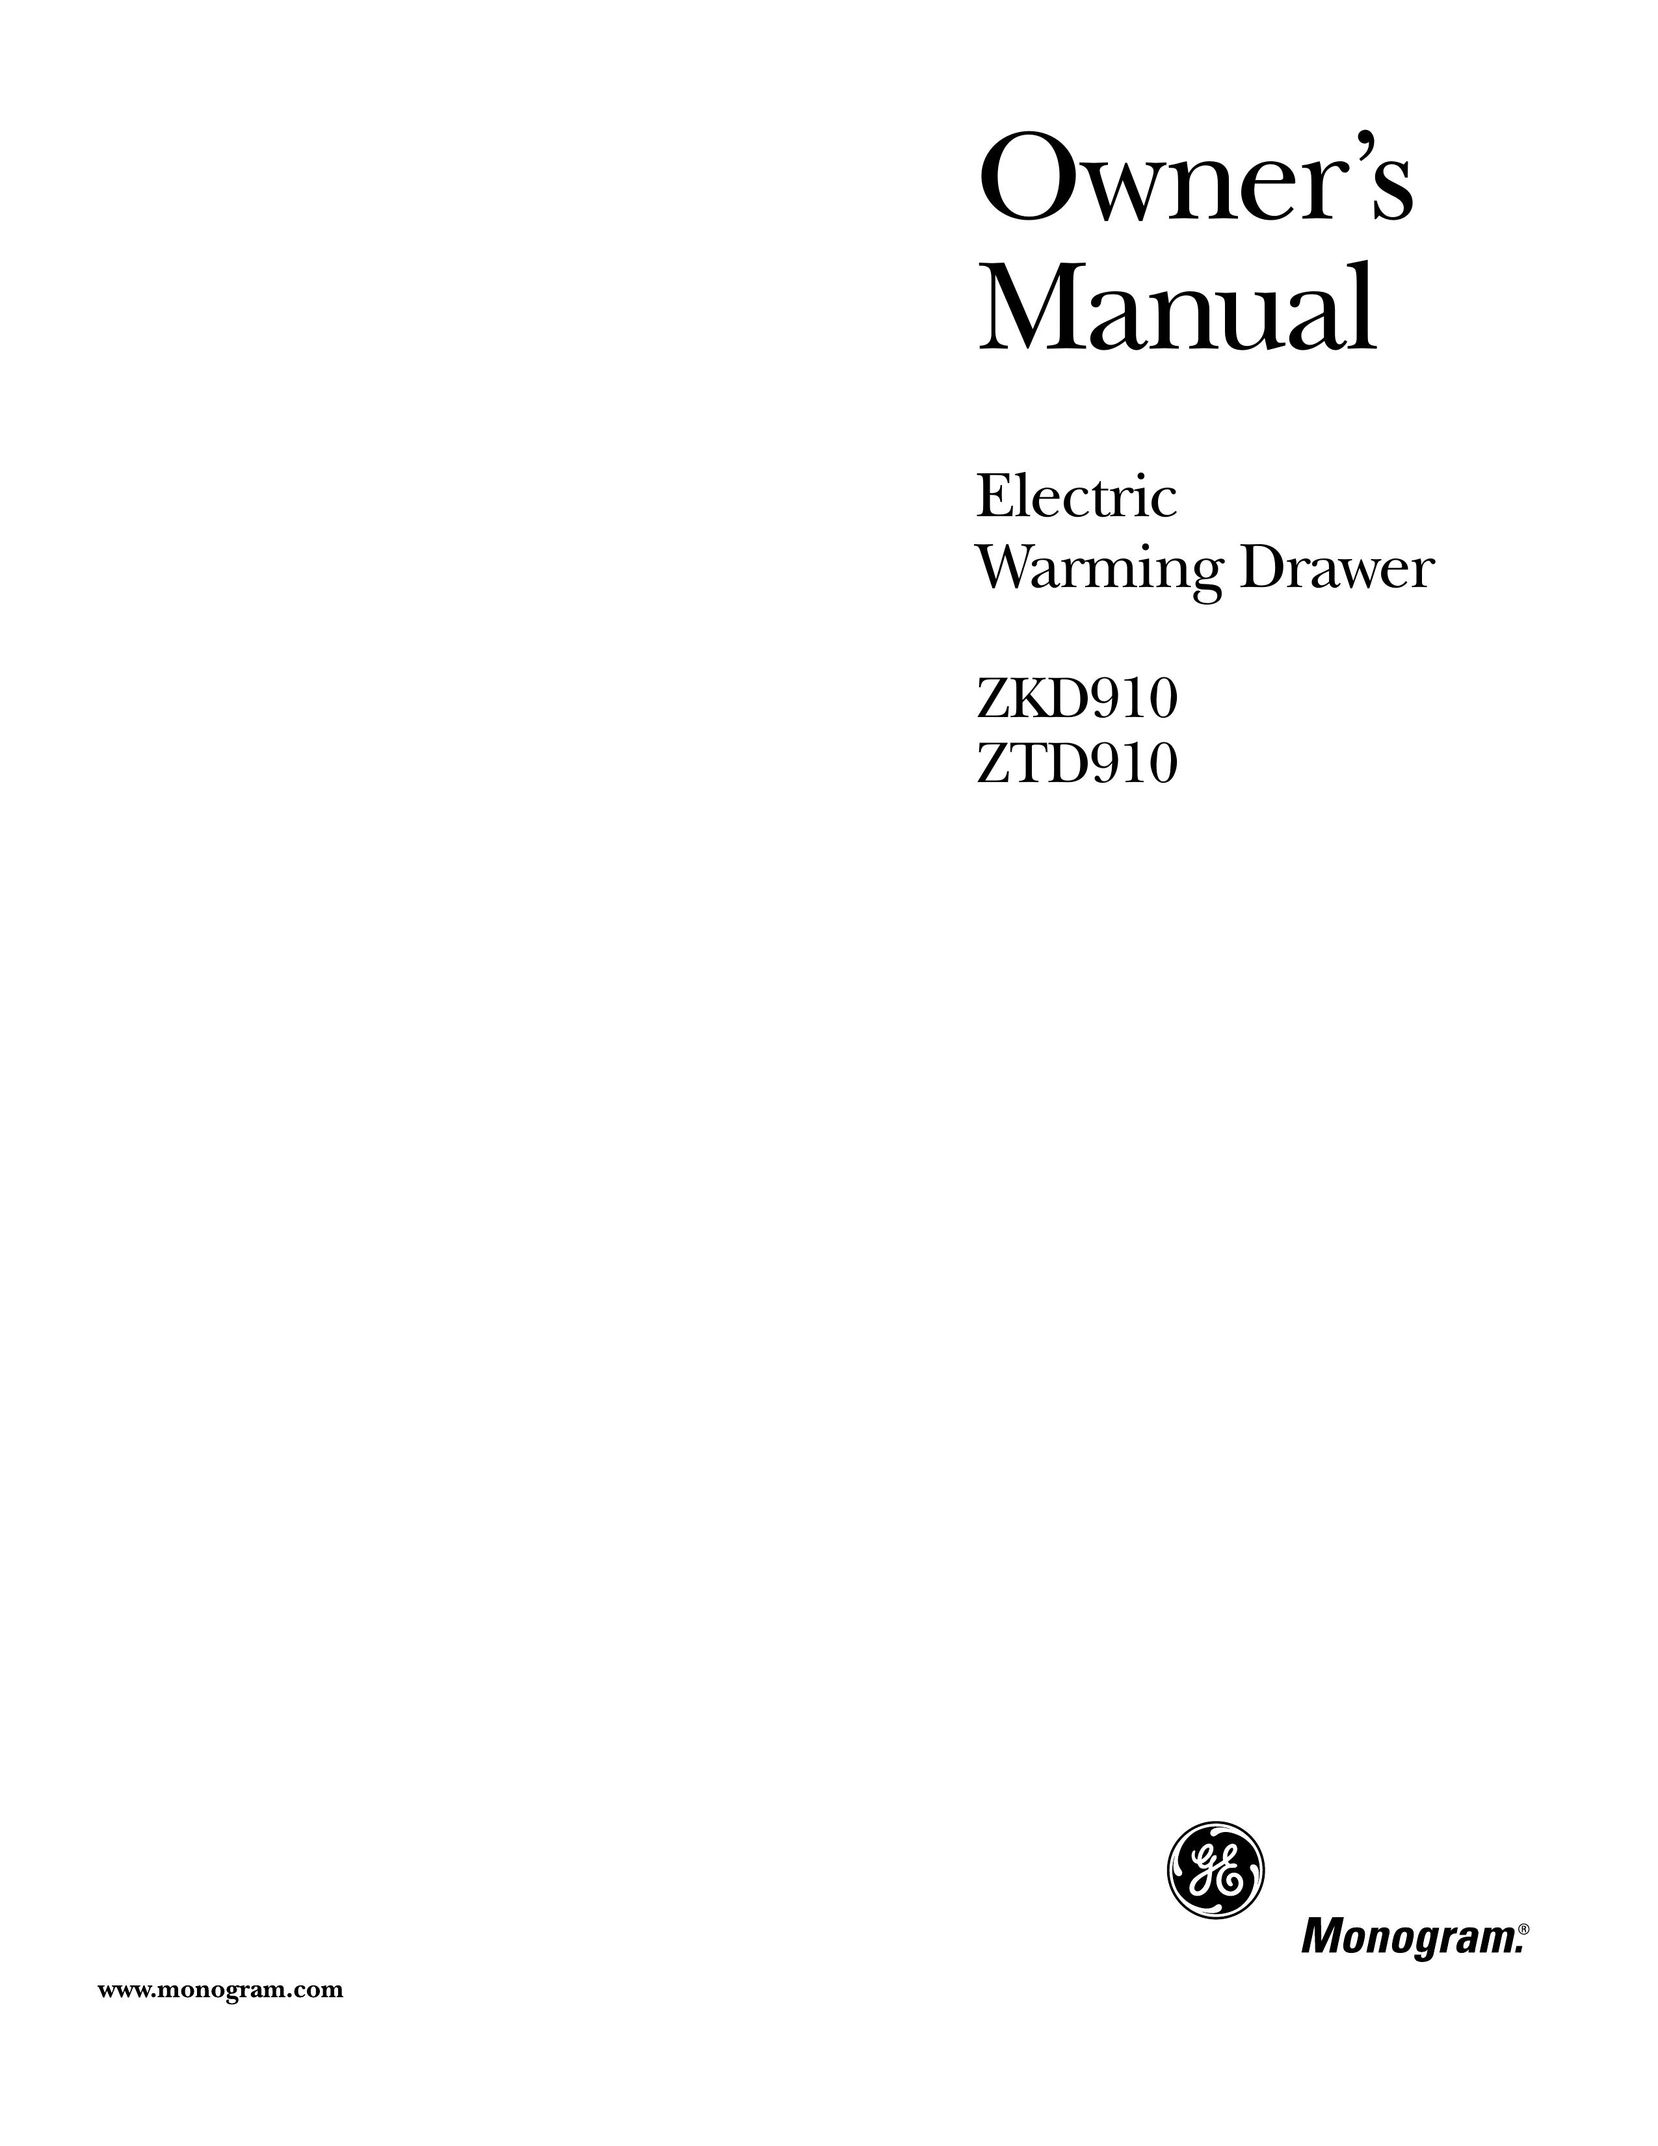 GE Monogram ZTD910 Food Warmer User Manual